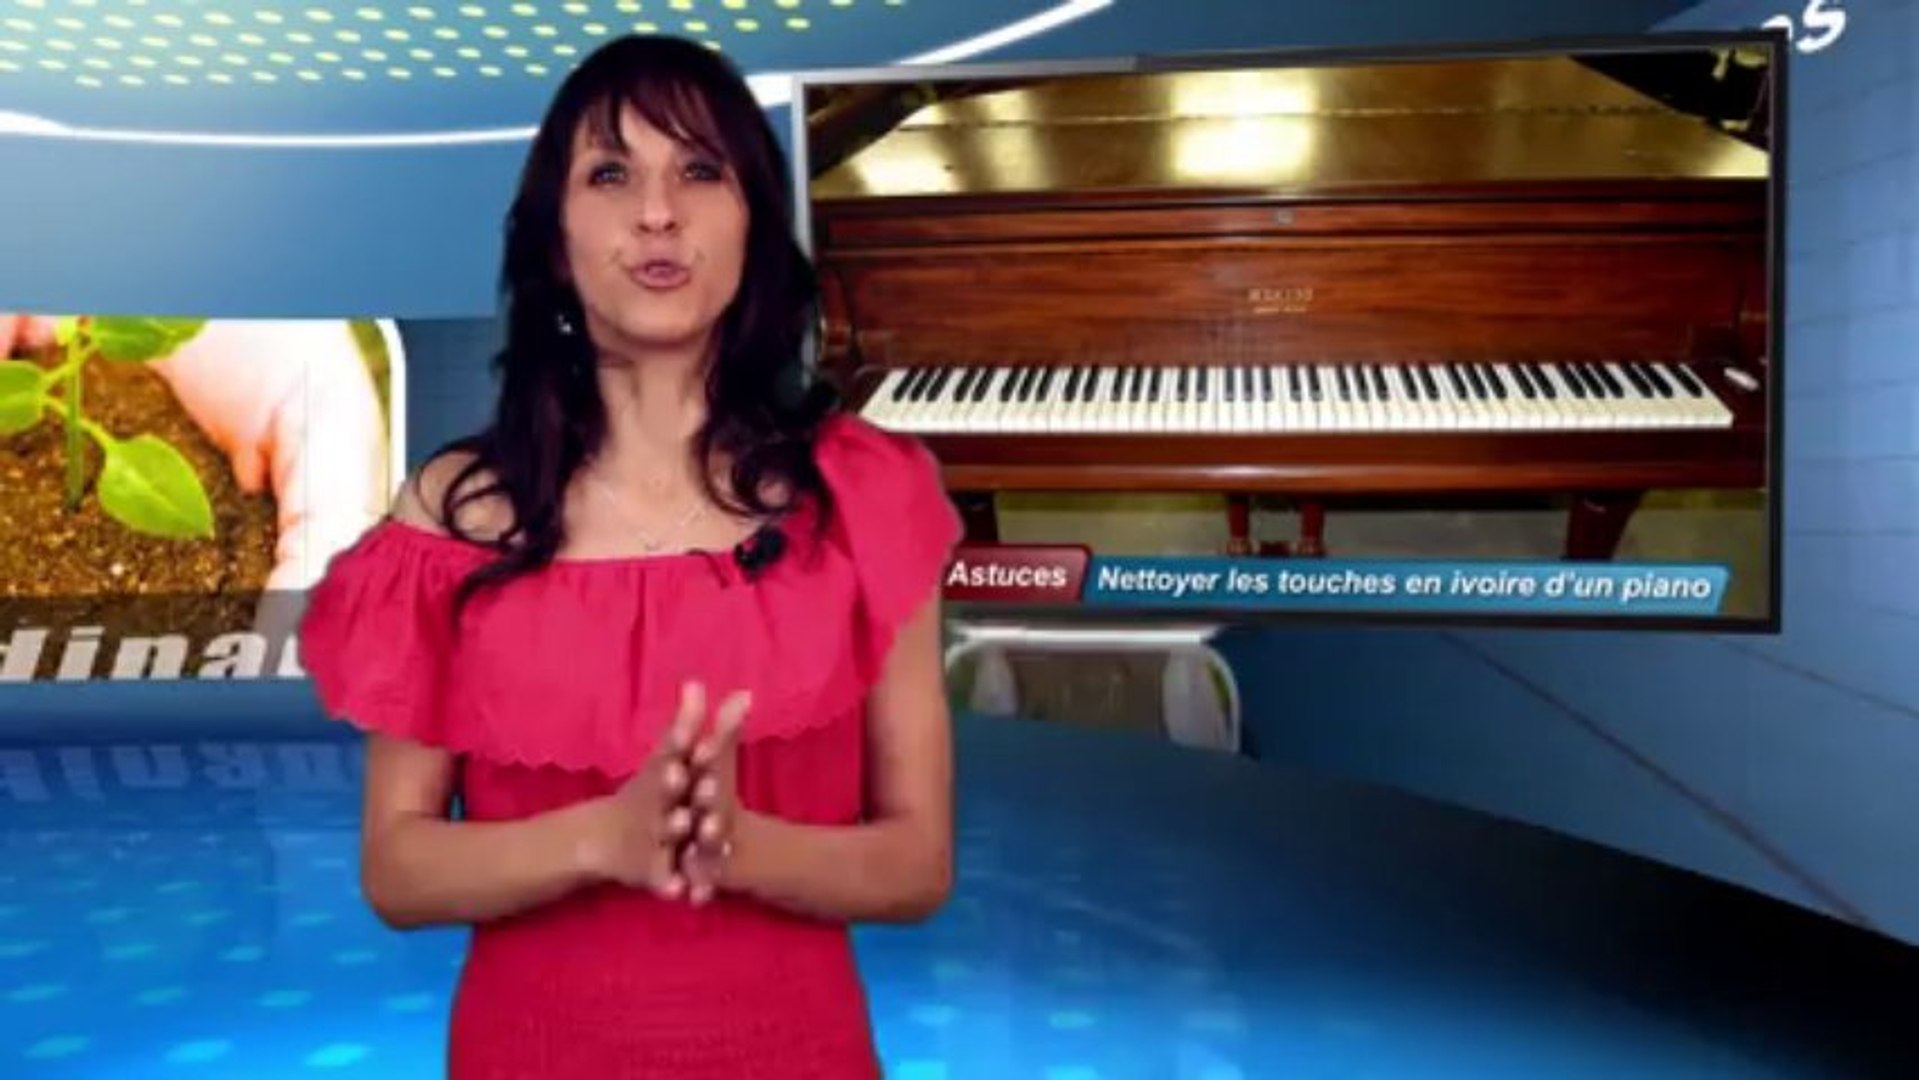 Nettoyer les touches en ivoire d'un piano? - Clean the ivory keys of a piano?  - Vidéo Dailymotion